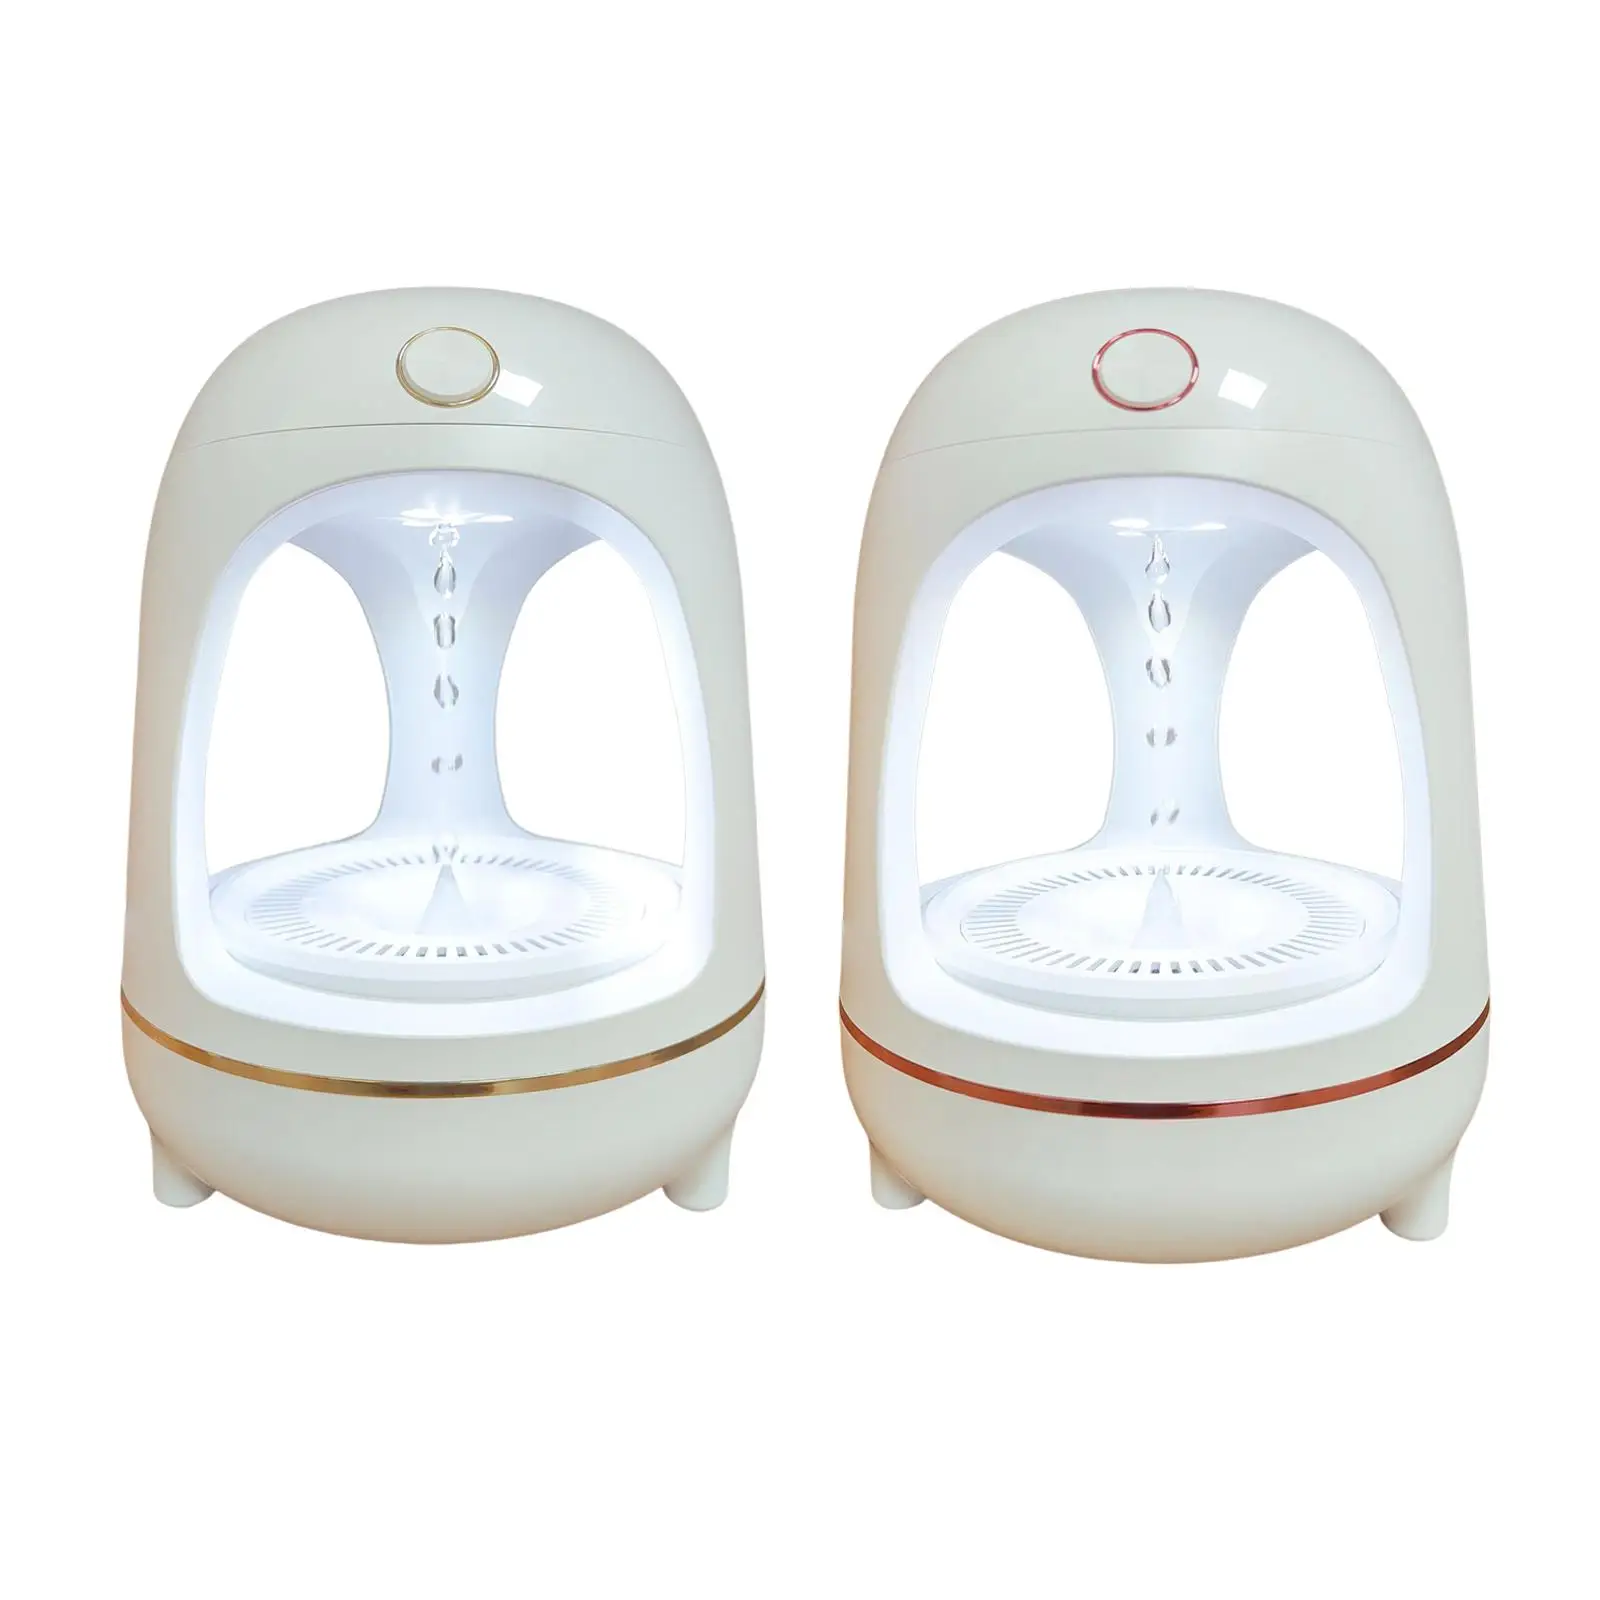 Desktop Air Humidifier Antigravity Water Droplet Countercurrent 700ml Night Light for Hotel Home Bedroom NightStand